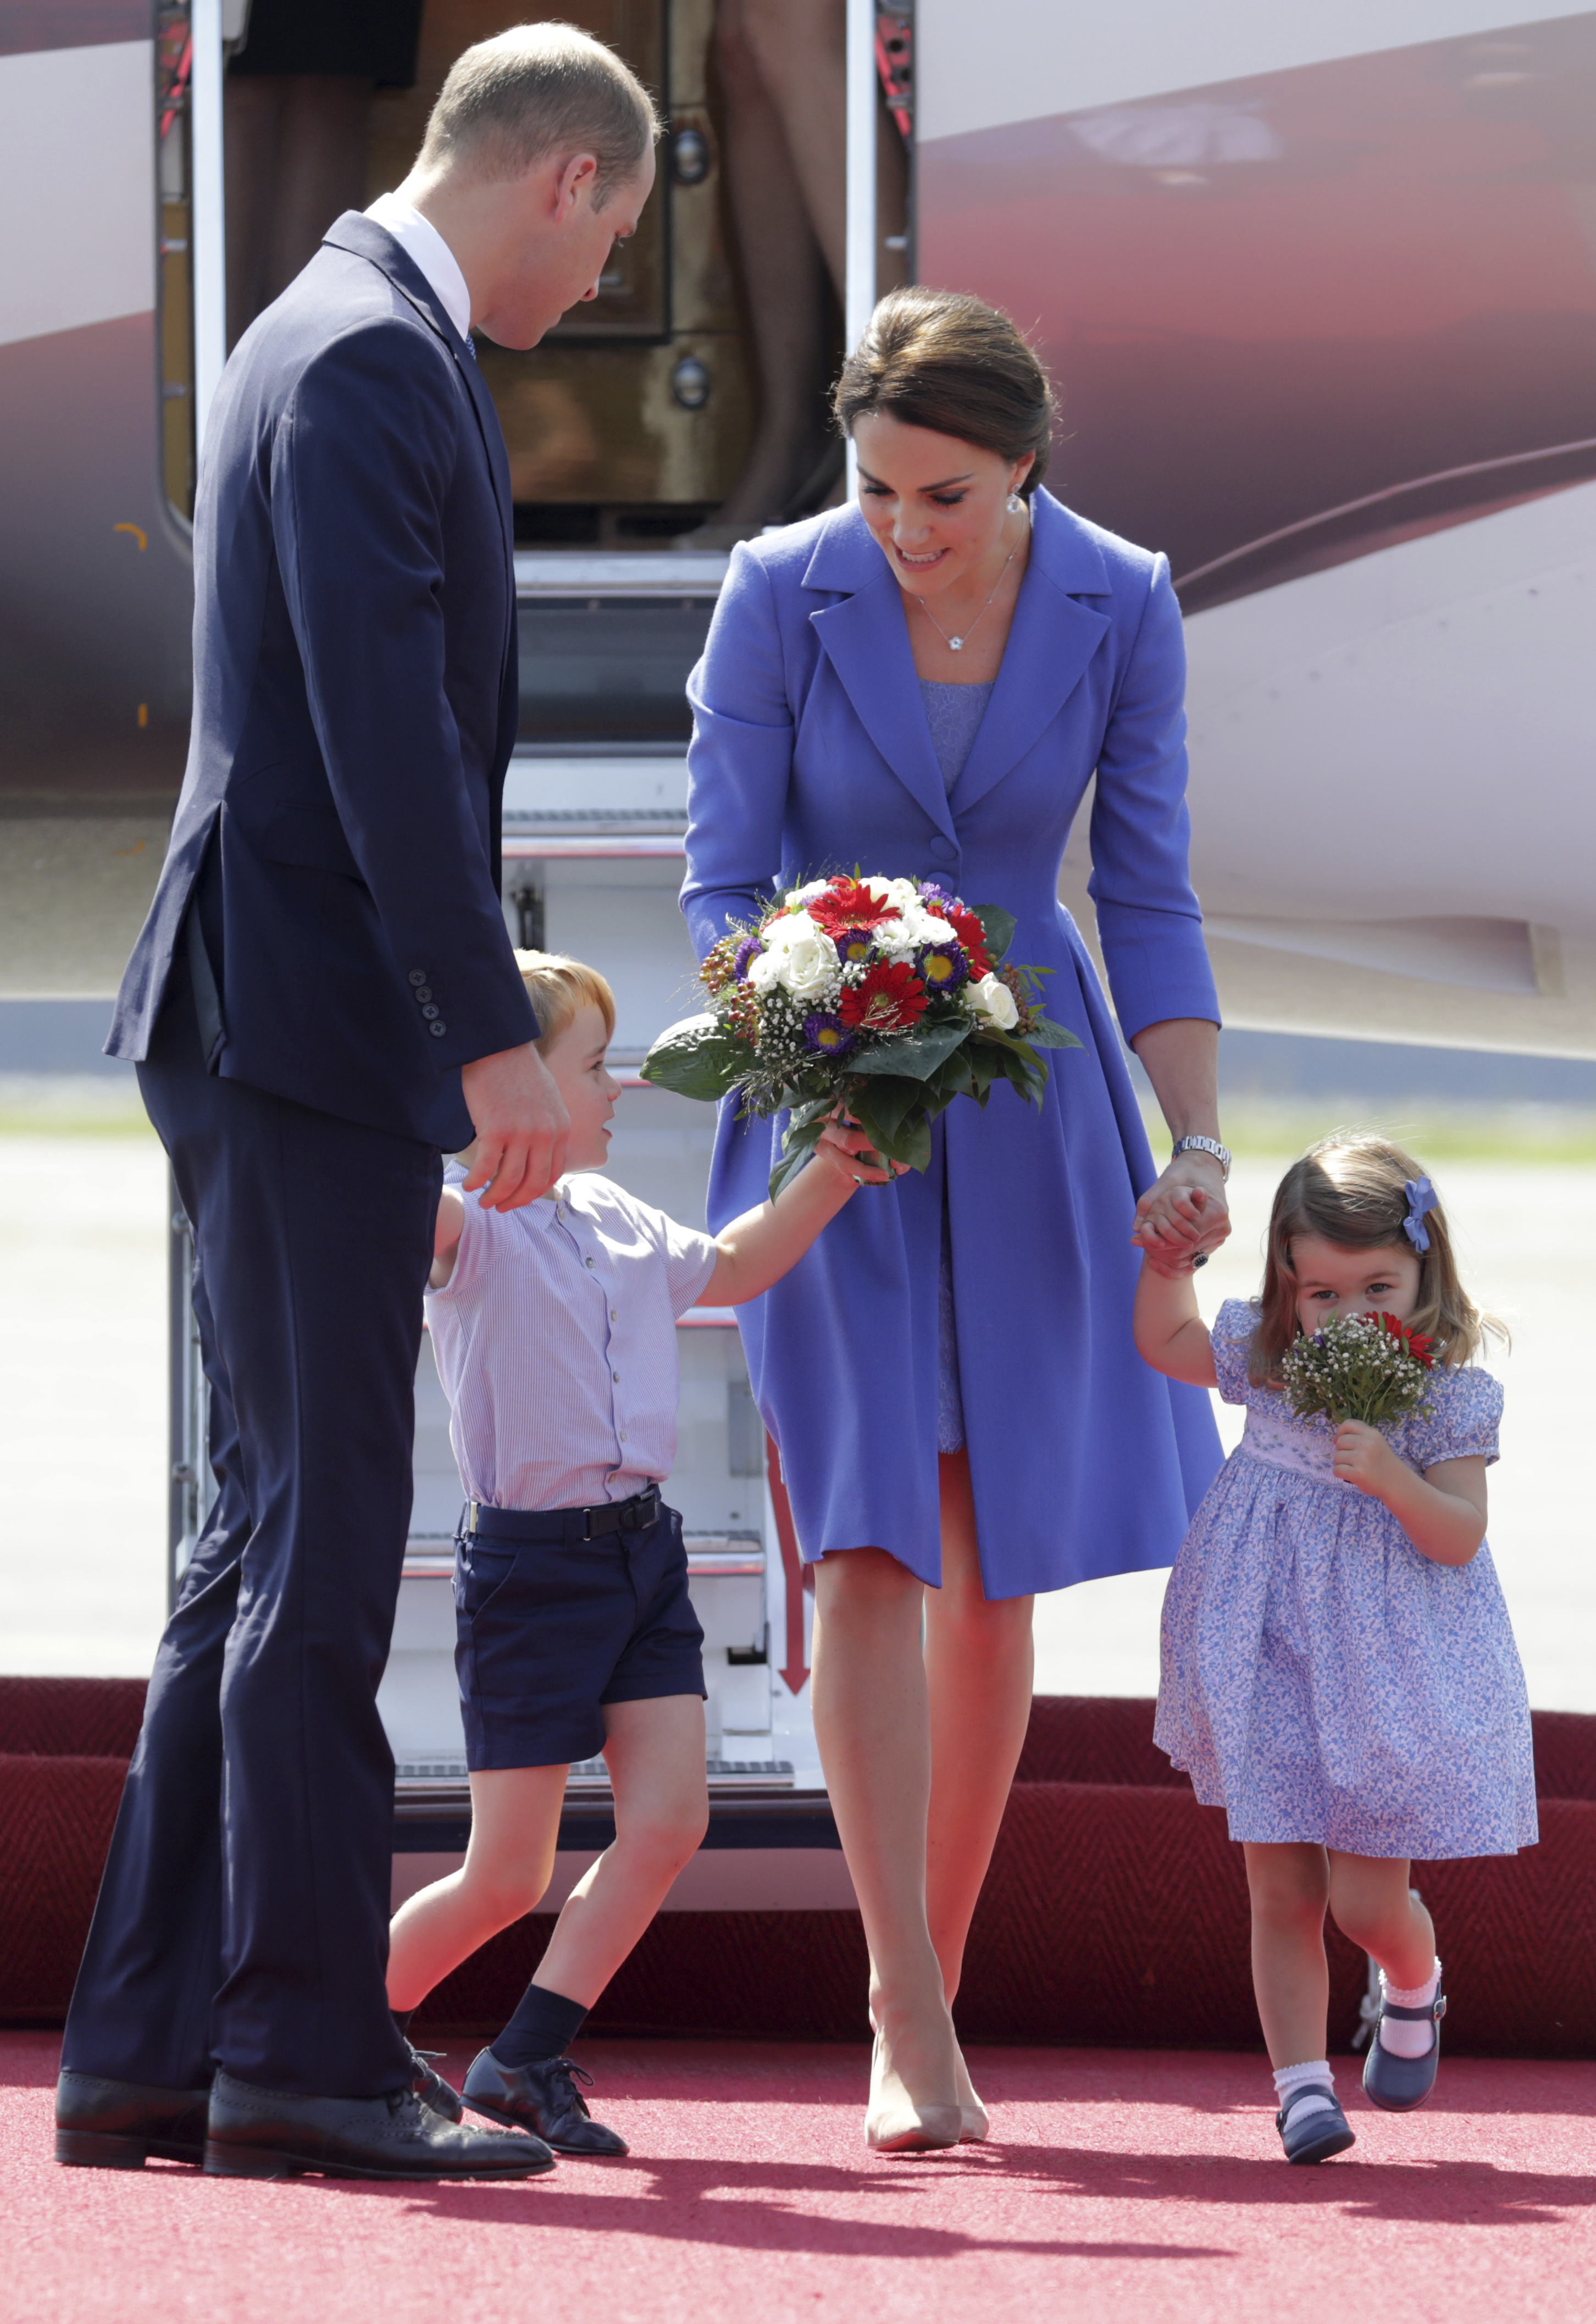 Принц Уилям, Катрин и децата им - принц Джордж и пренцеса Шарлот пристигат в Германия